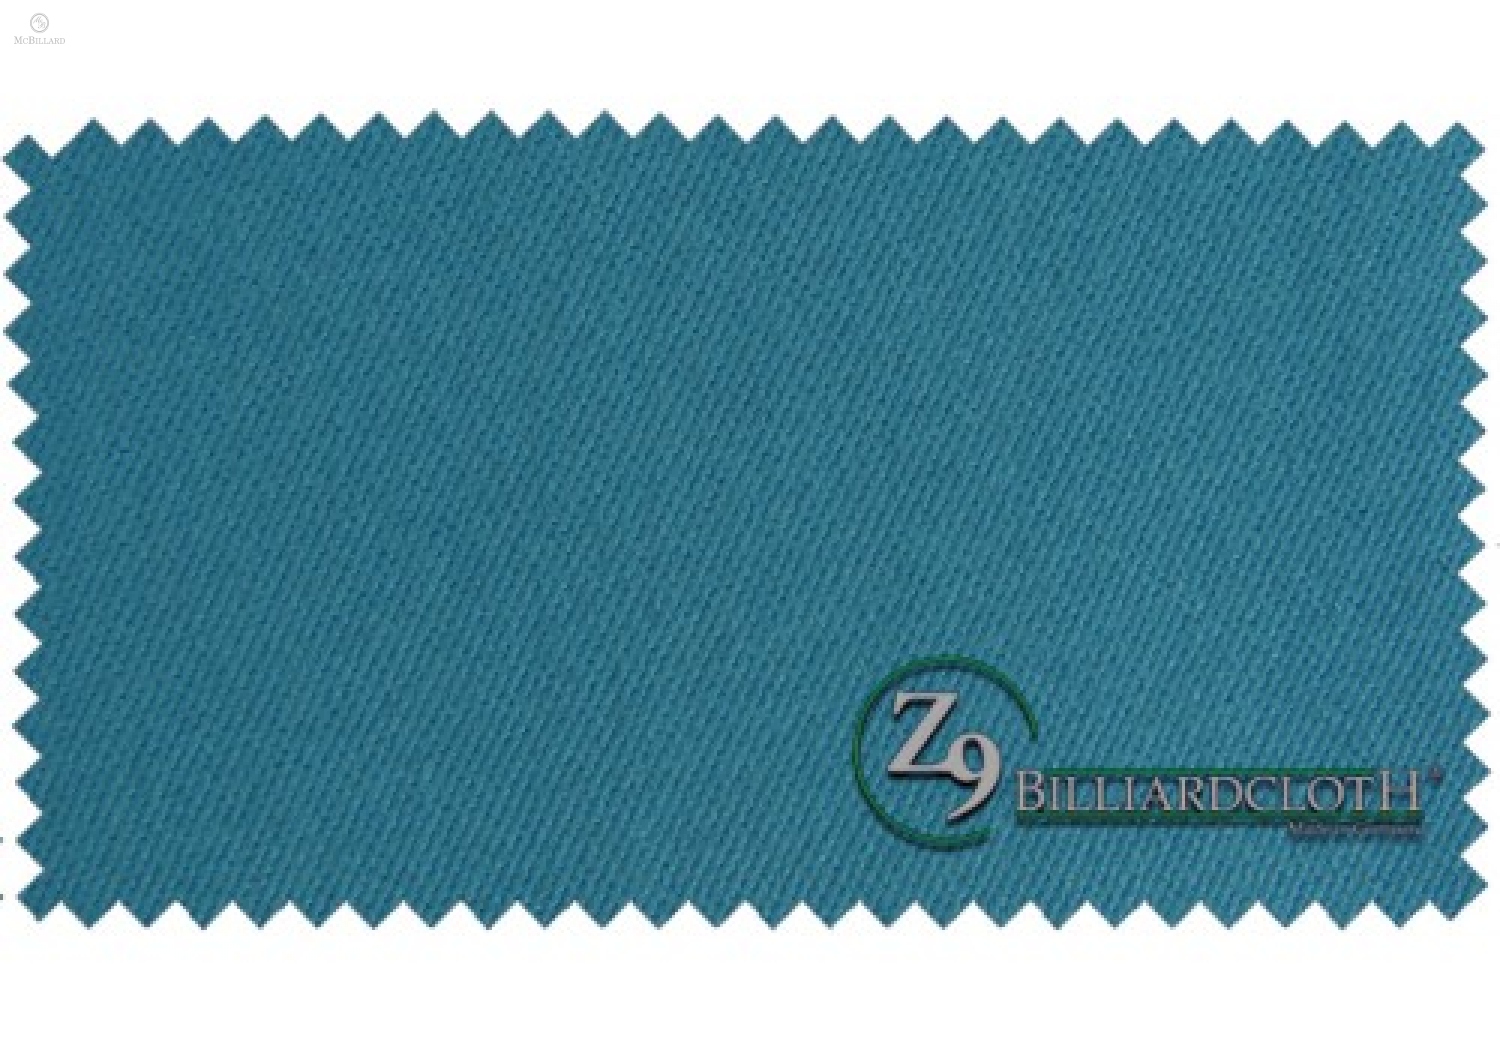 Billardtuch Z9 BilliardCloth® - 170 cm Breite, Powder Blue